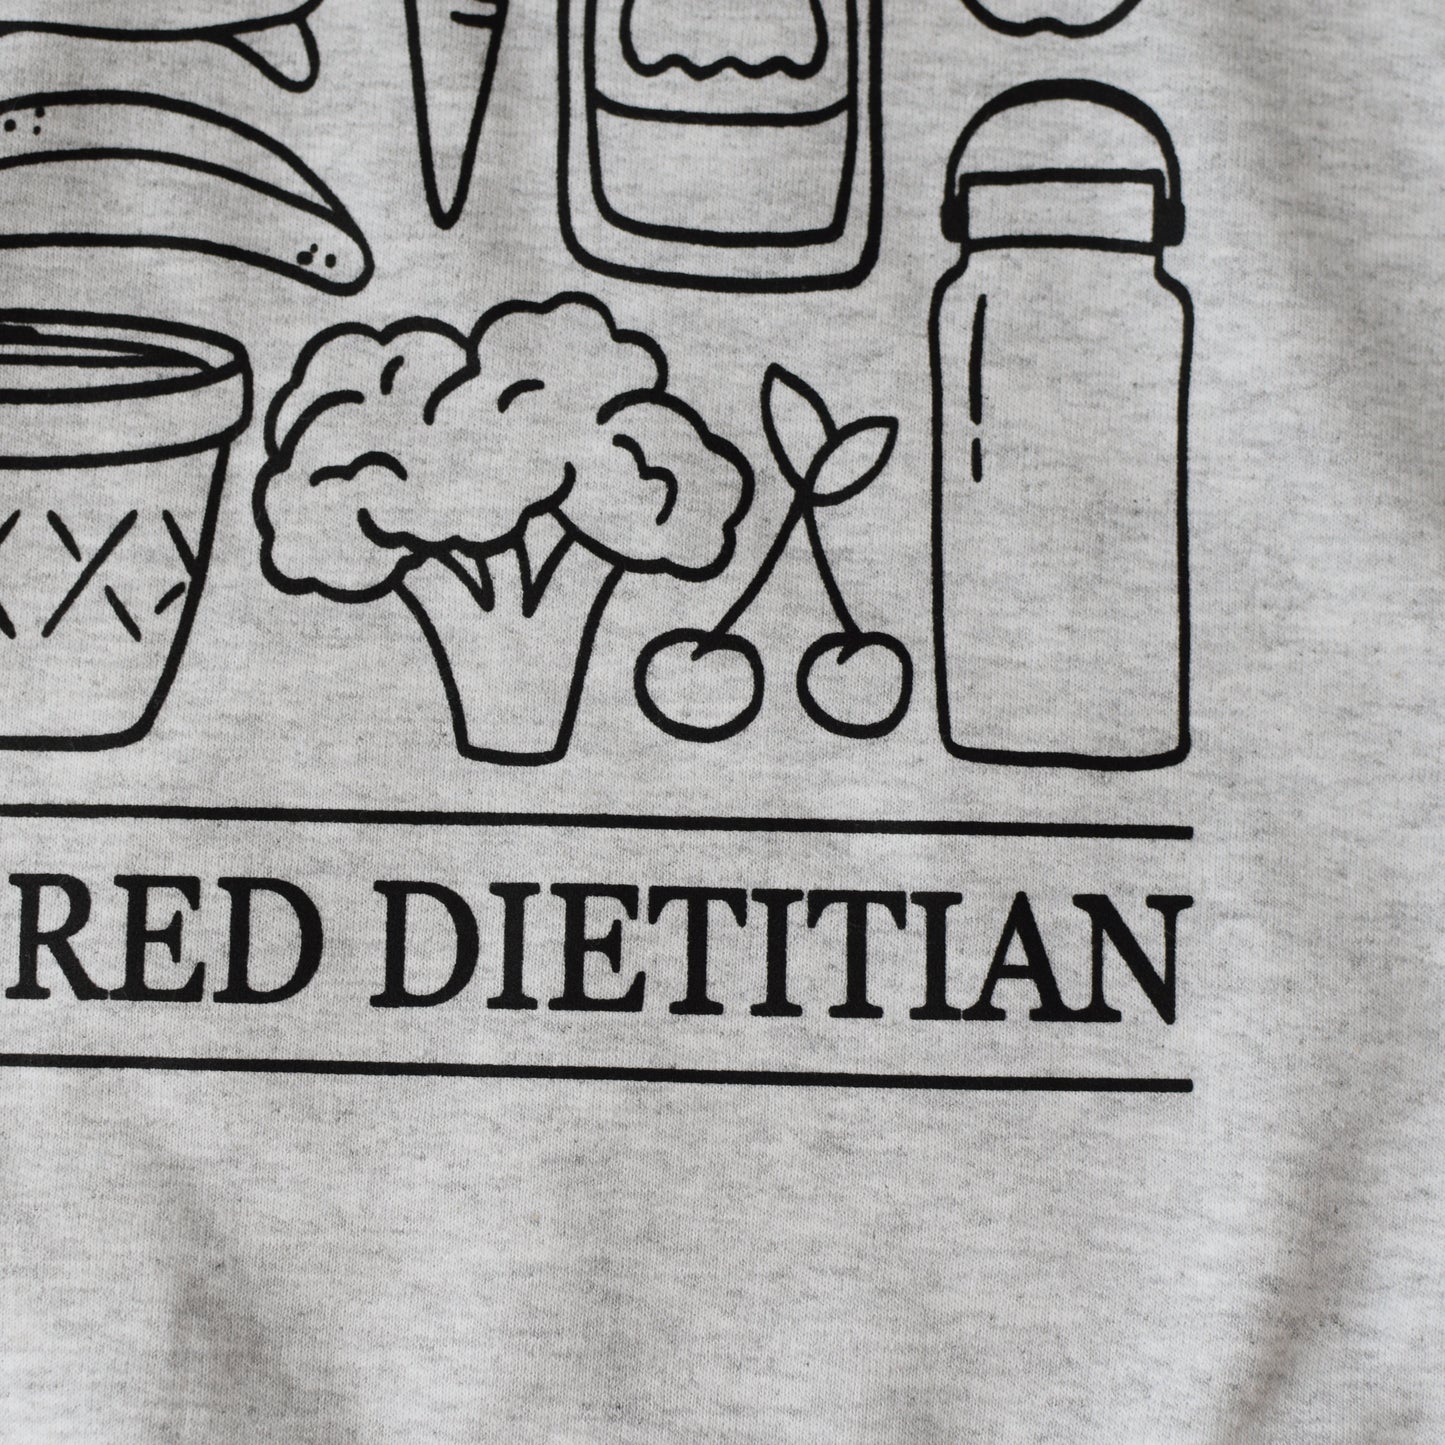 Registered Dietitian Icons Sweatshirt